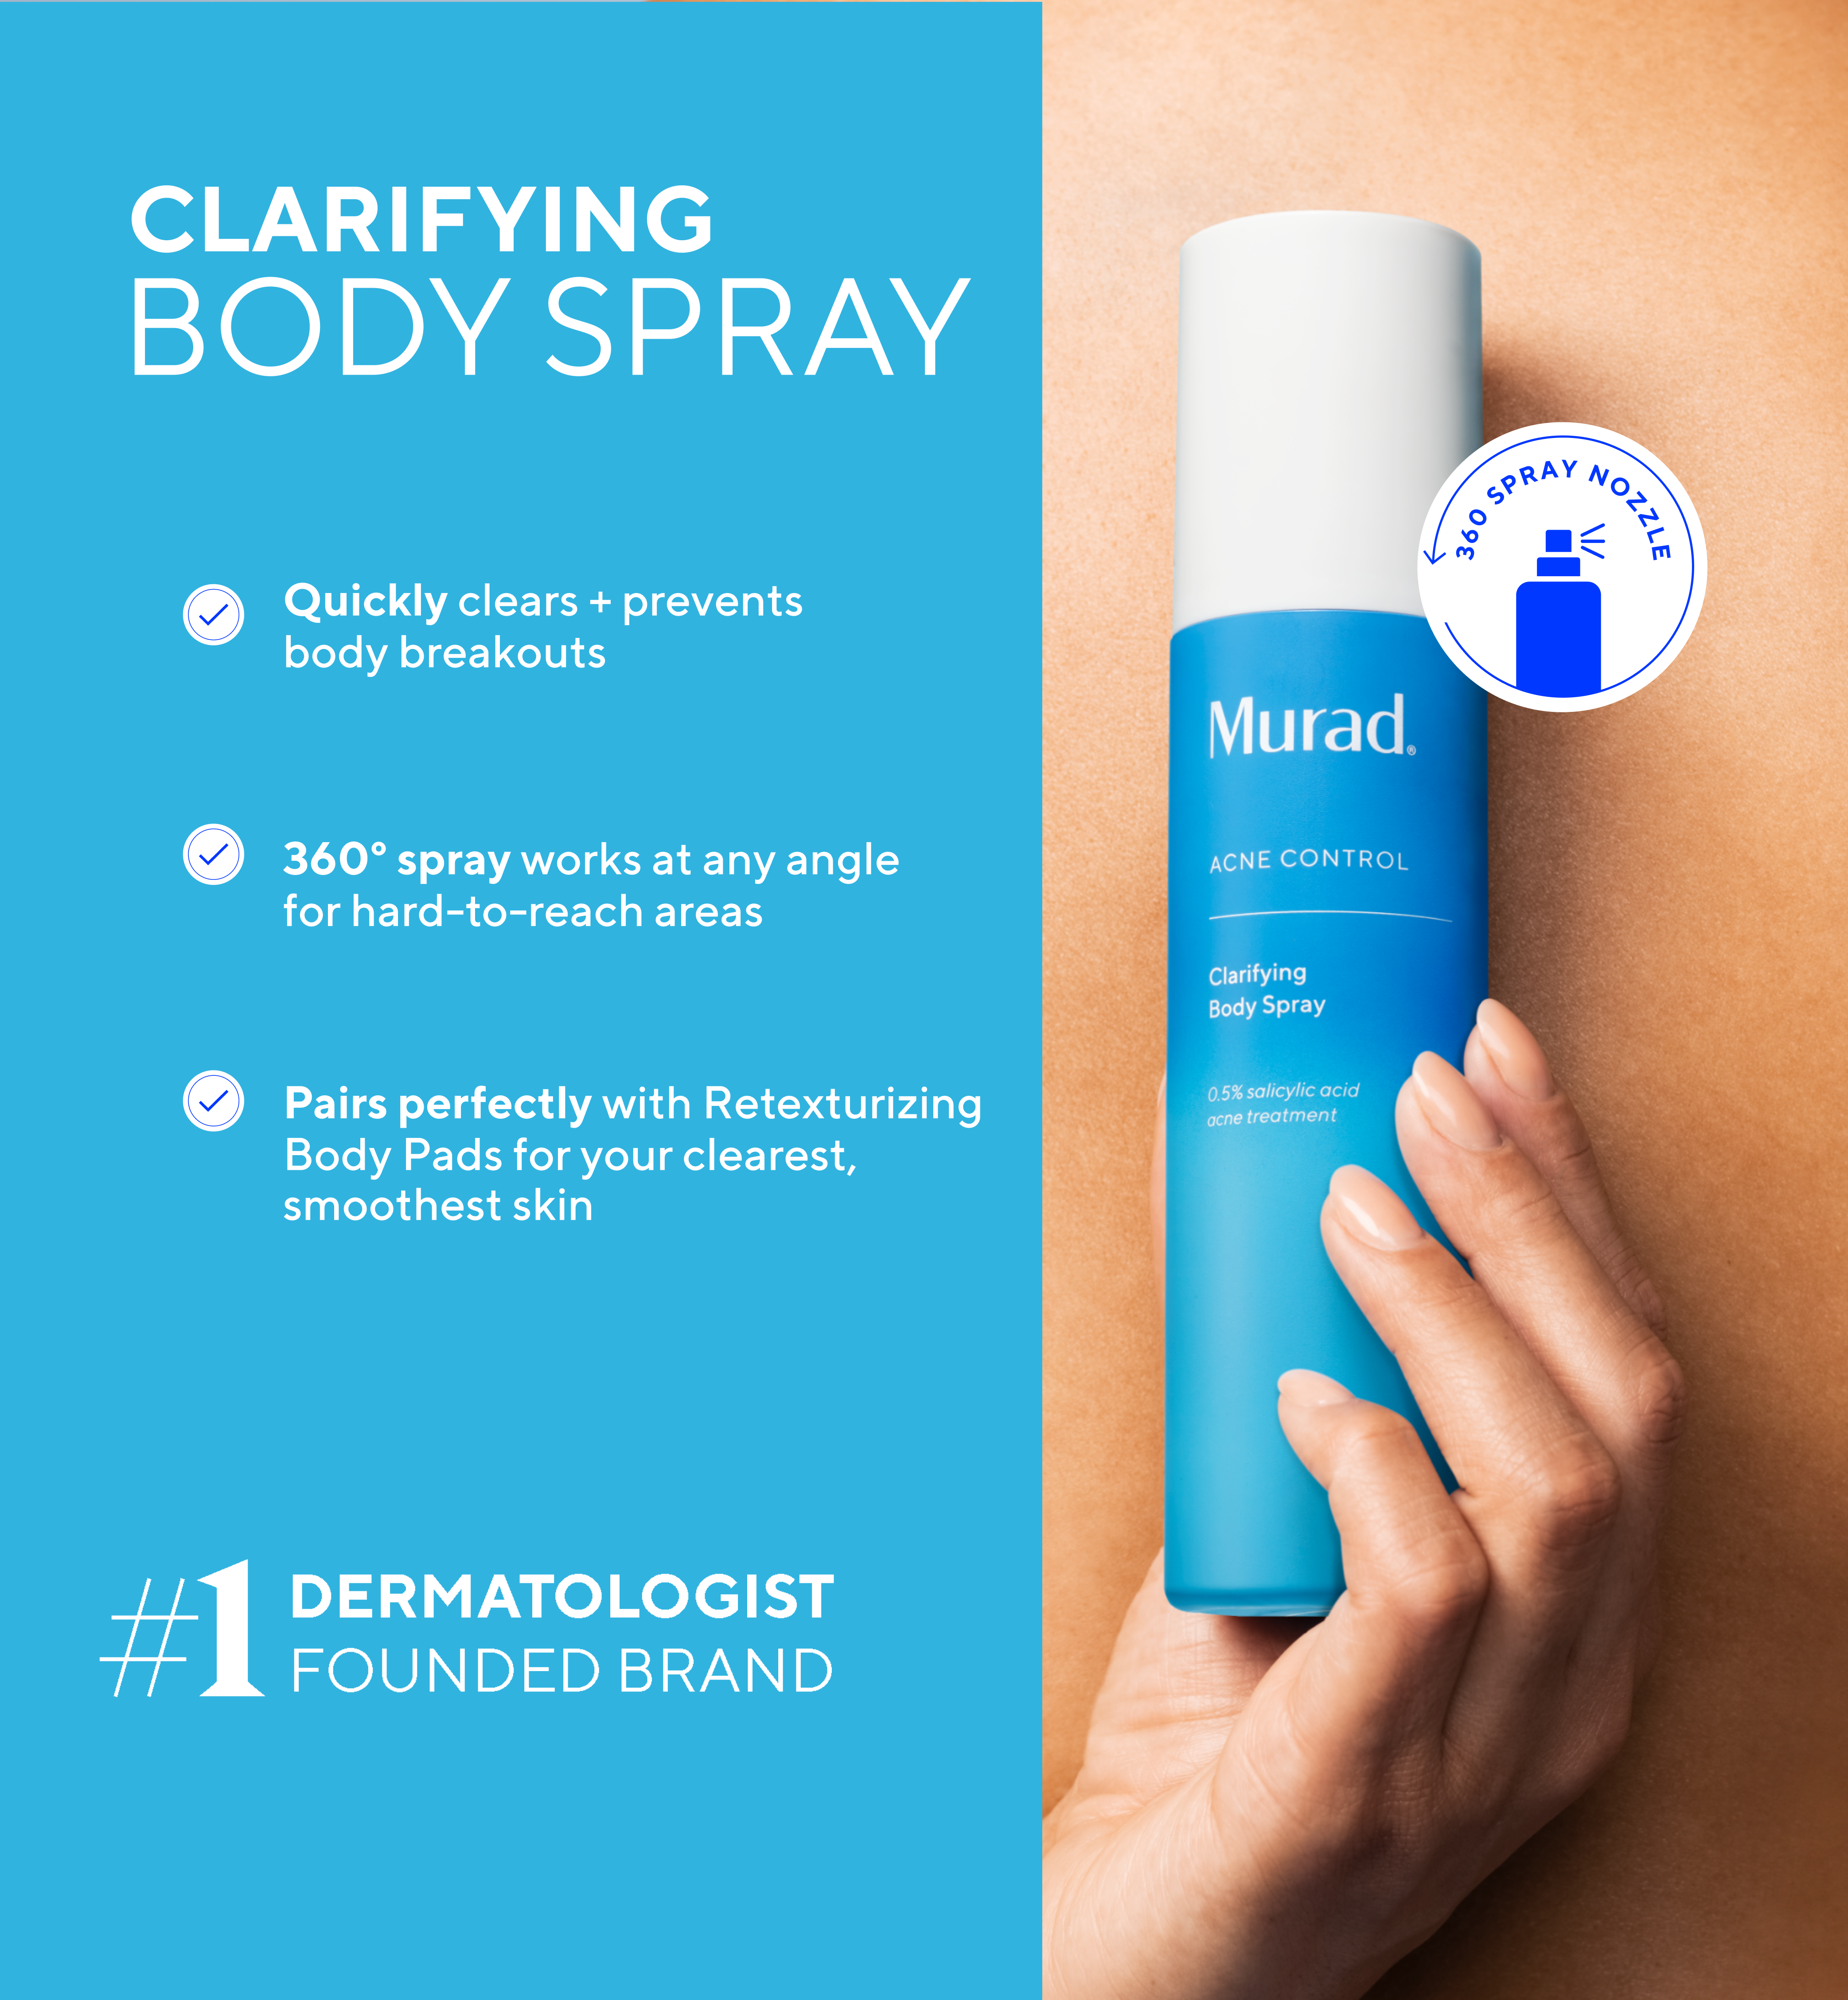 Clarifying Body Spray